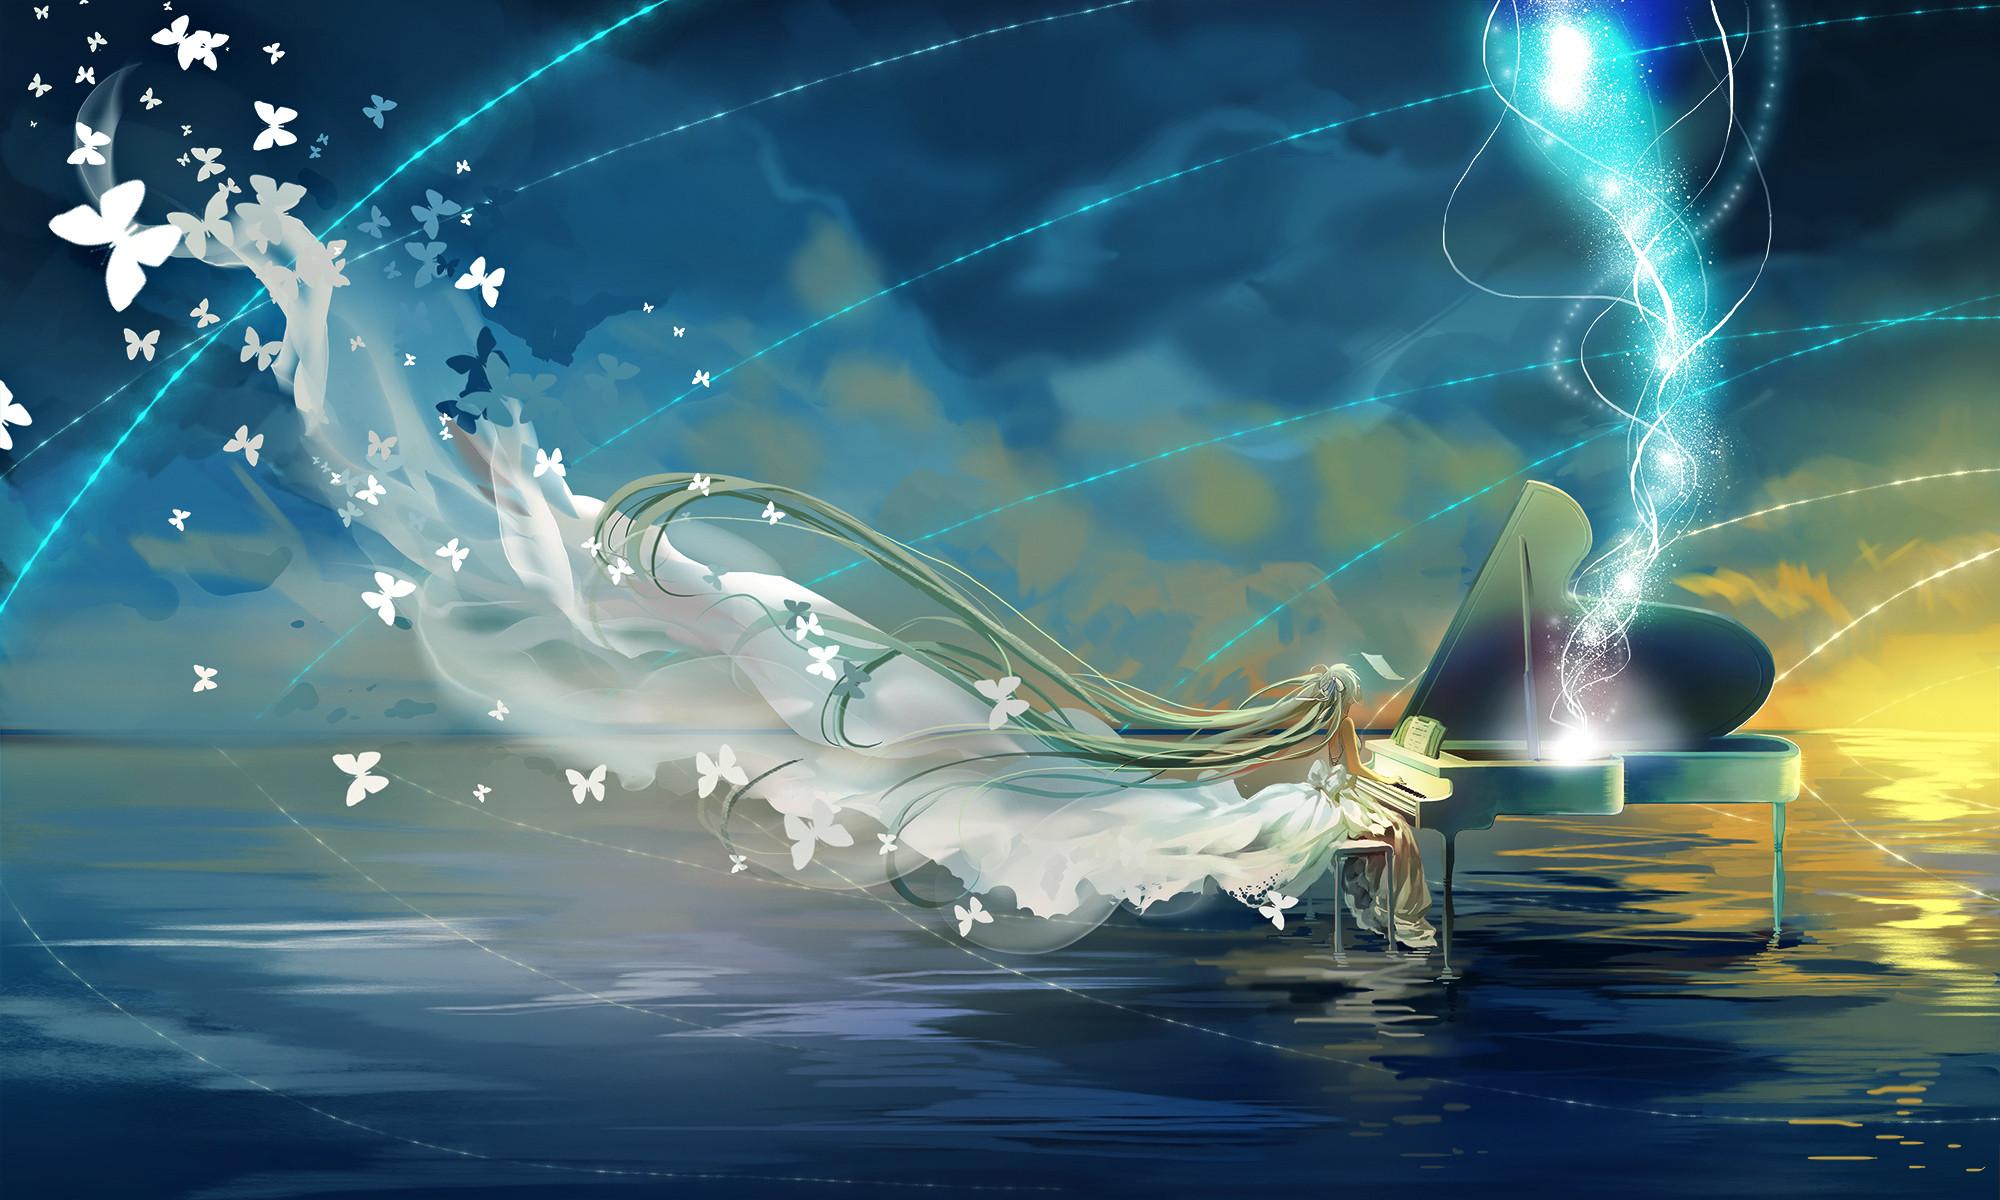  Klavier Anime Hintergrundbild 2000x1200. Anime Hatsune Miku Piano Wallpaper Free Anime Hatsune Miku Piano Background